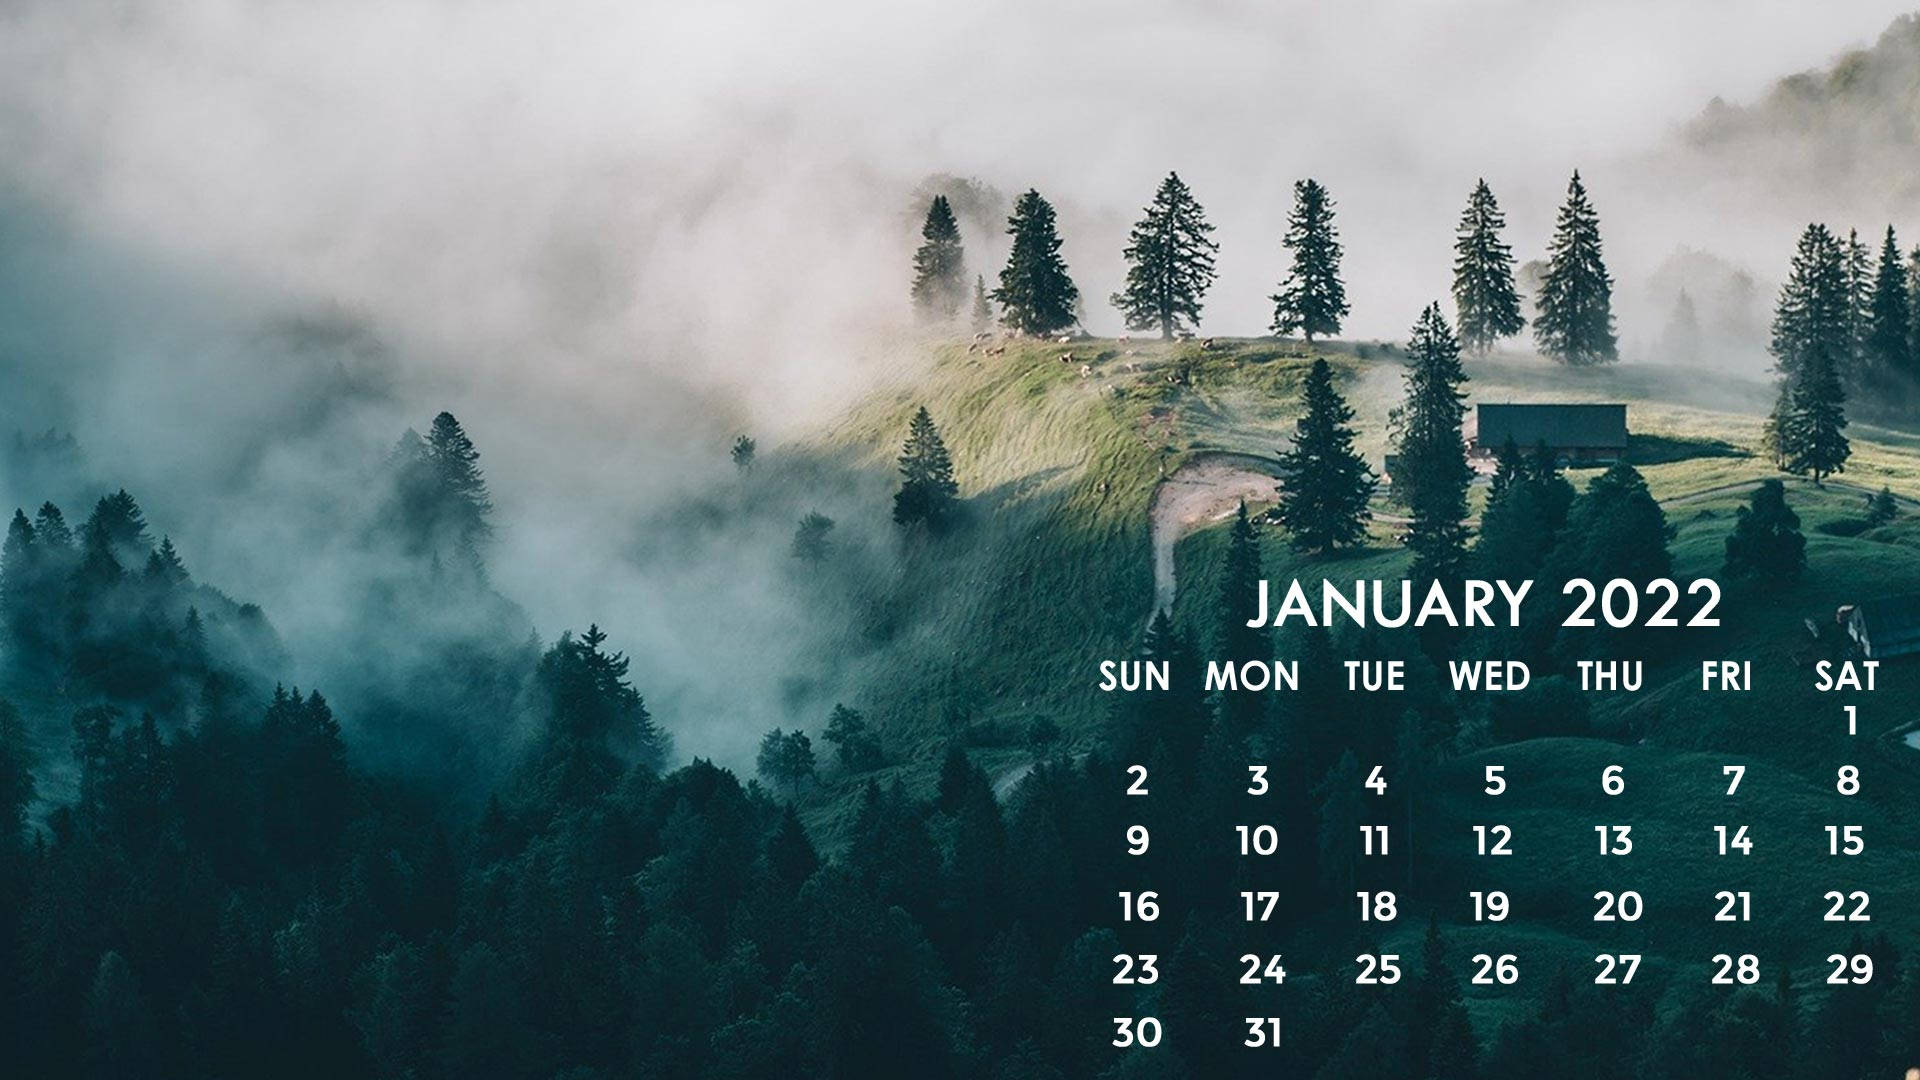 Foggy Mountain Top January 2022 Calendar Background